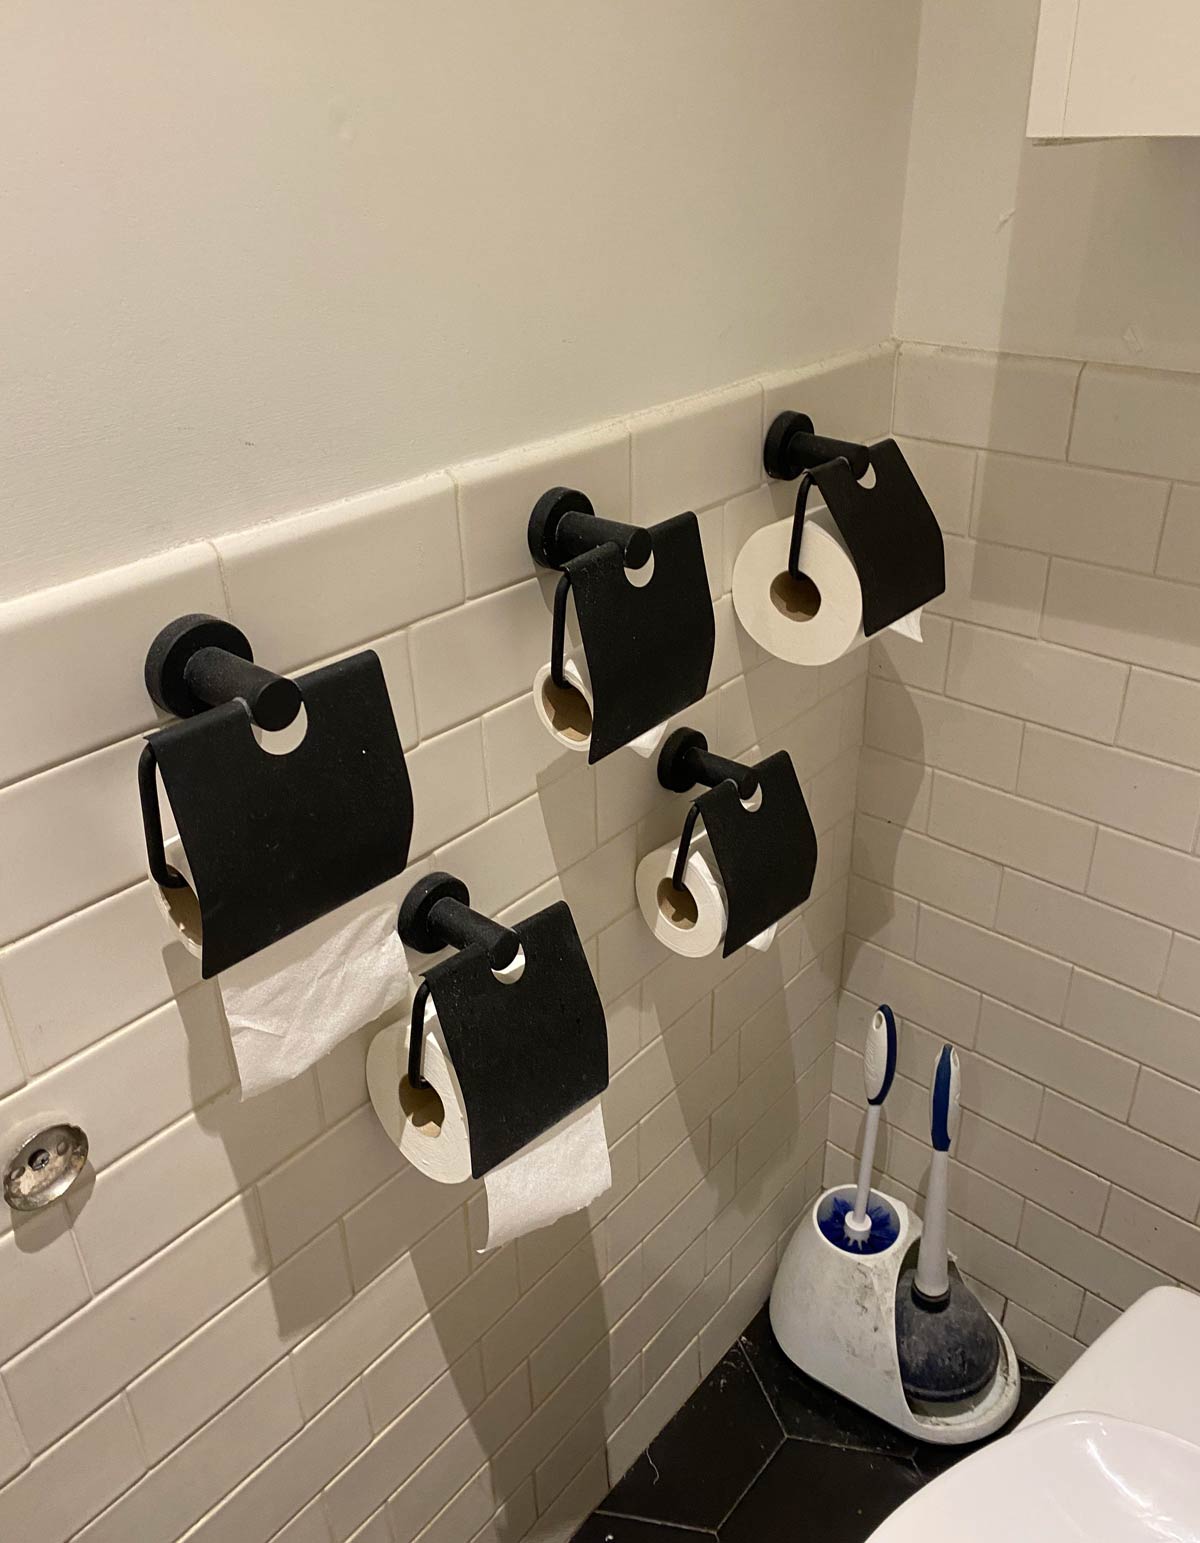 Five toilet paper holders in this bathroom